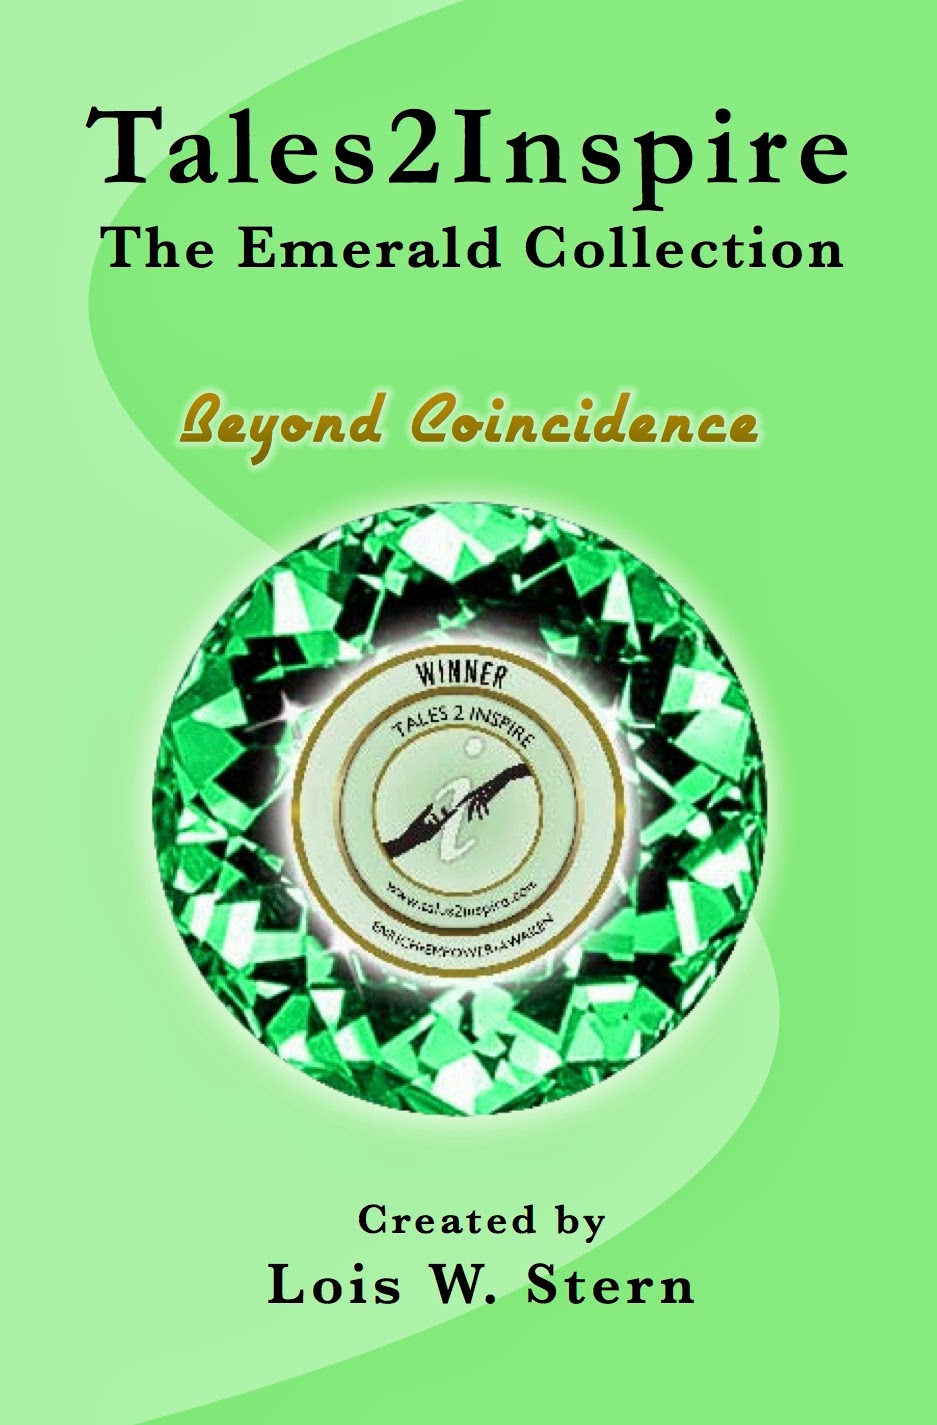 http://www.amazon.com/Tales2Inspire-Emerald-Collection-Beyond-Coincidence-ebook/dp/B00FW9PFUY/ref=la_B005HOO640_1_1?s=books&ie=UTF8&qid=1394517941&sr=1-1